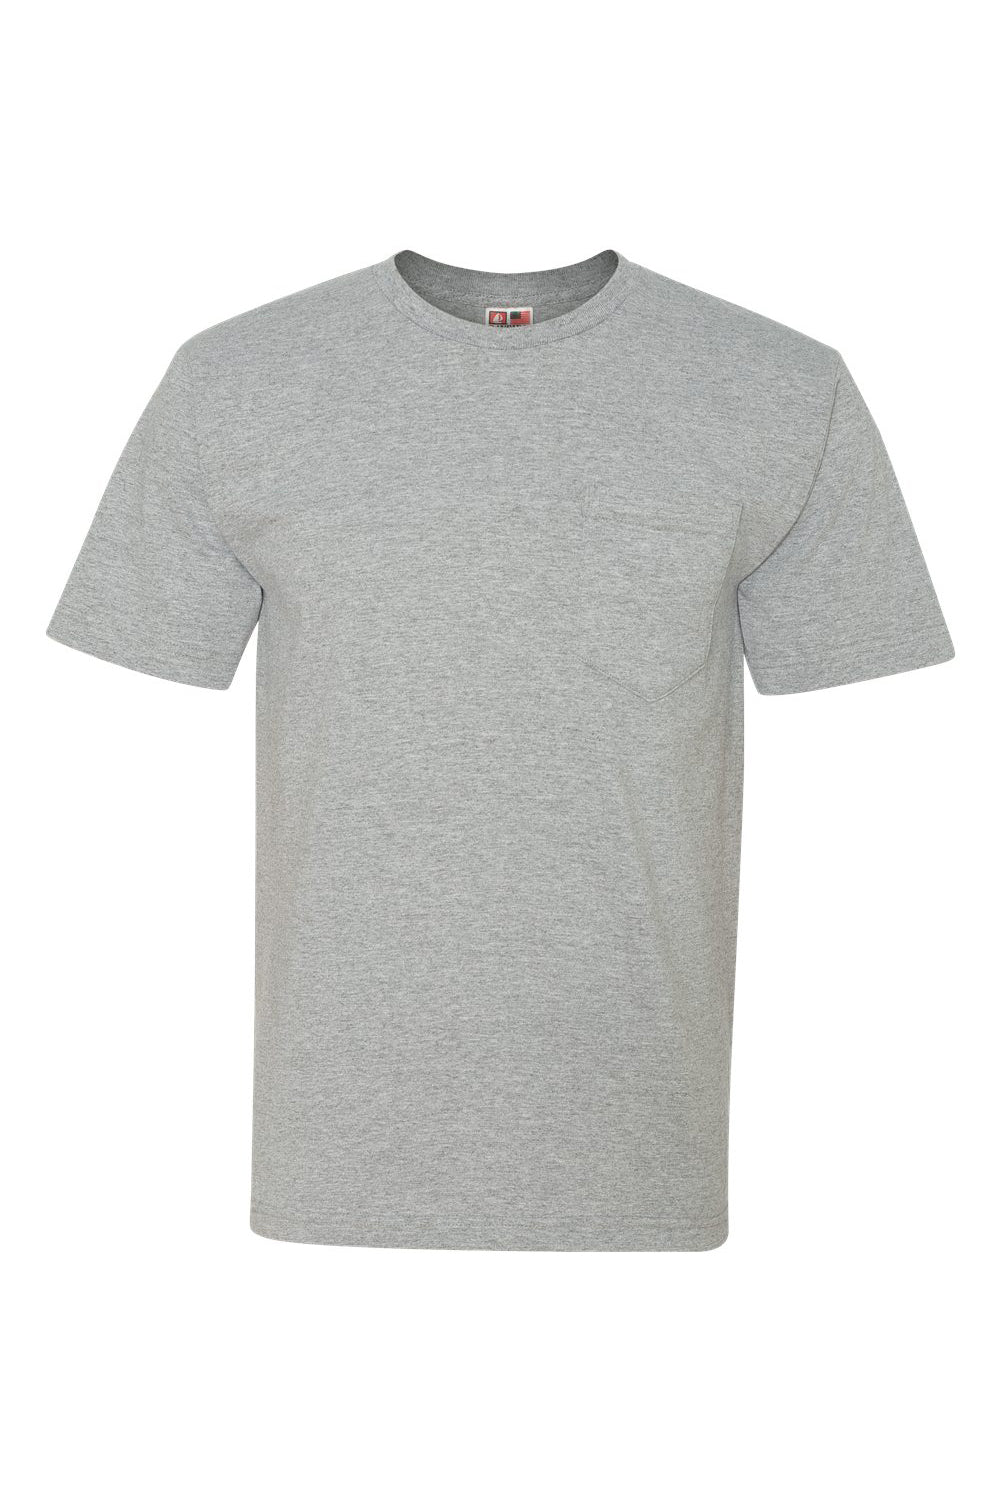 Bayside BA5070 Mens USA Made Short Sleeve Crewneck T-Shirt w/ Pocket Dark Ash Grey Flat Front